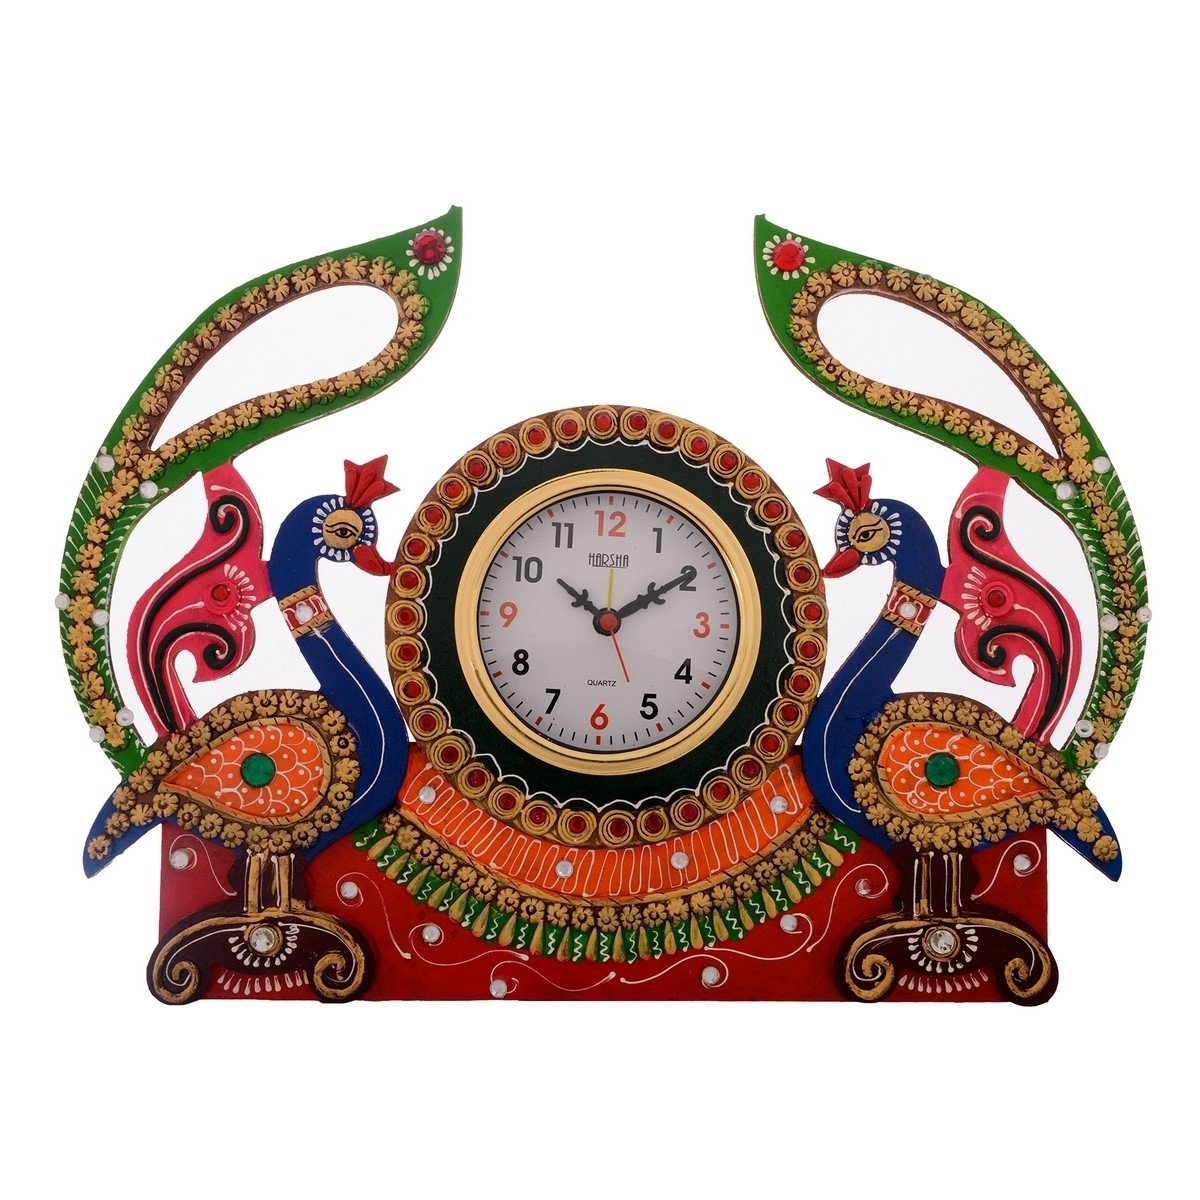 Beautiful Peacock Design Decorative Papier-Mache Wooden Wall Clock